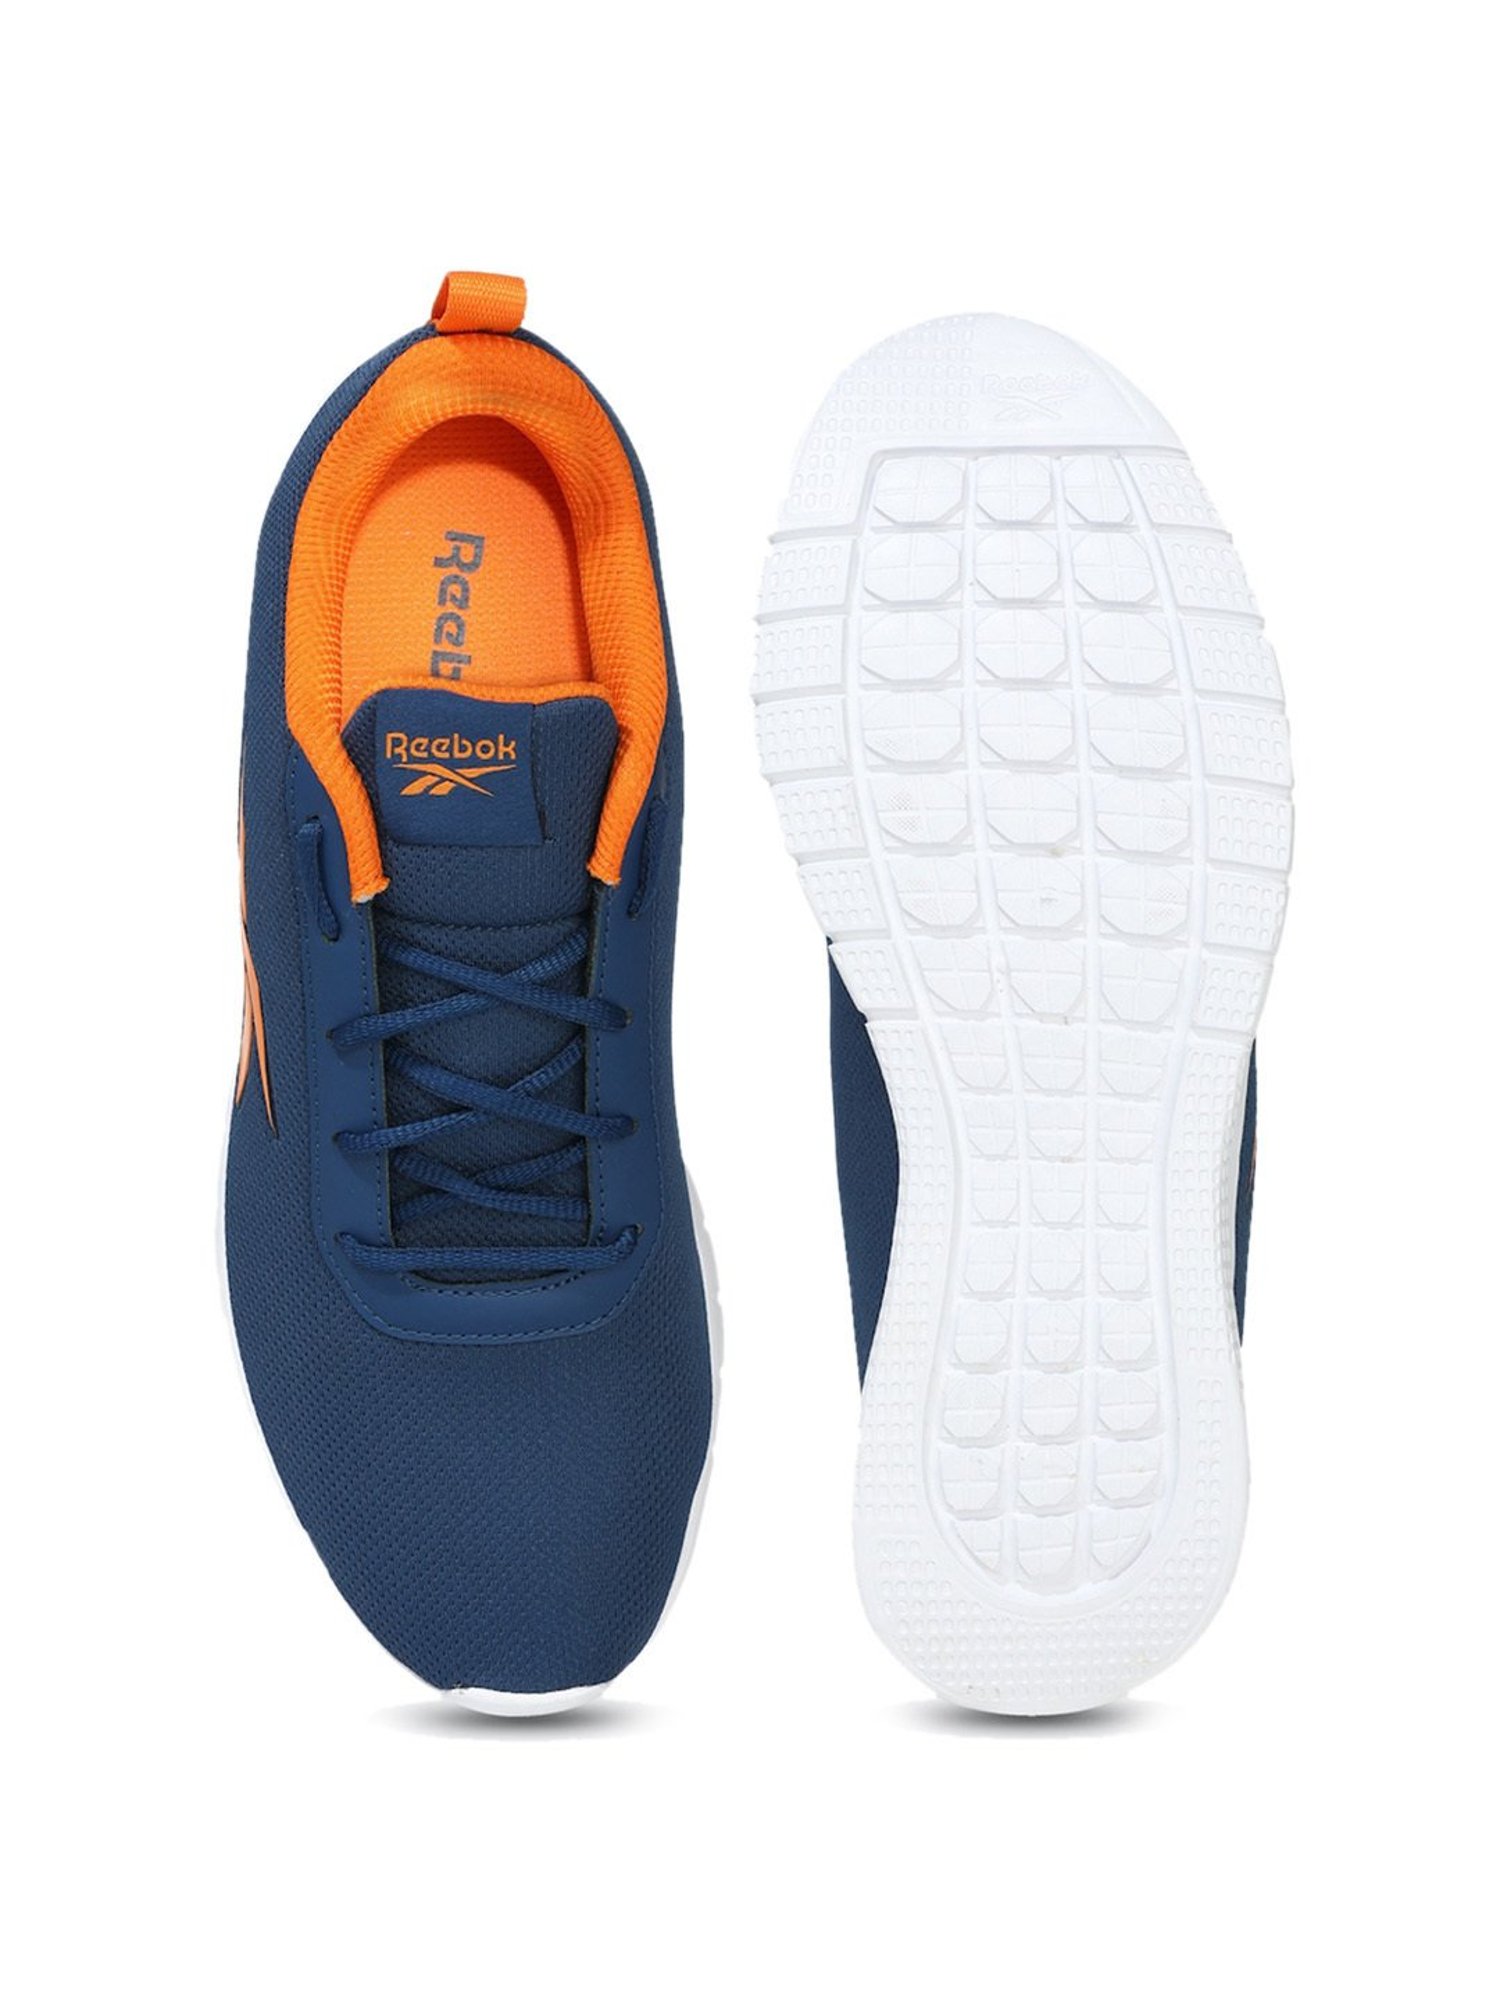 Reebok More Buckets Black Blue Men Basketball Shoes Sneakers HR0535 |  Kixify Marketplace